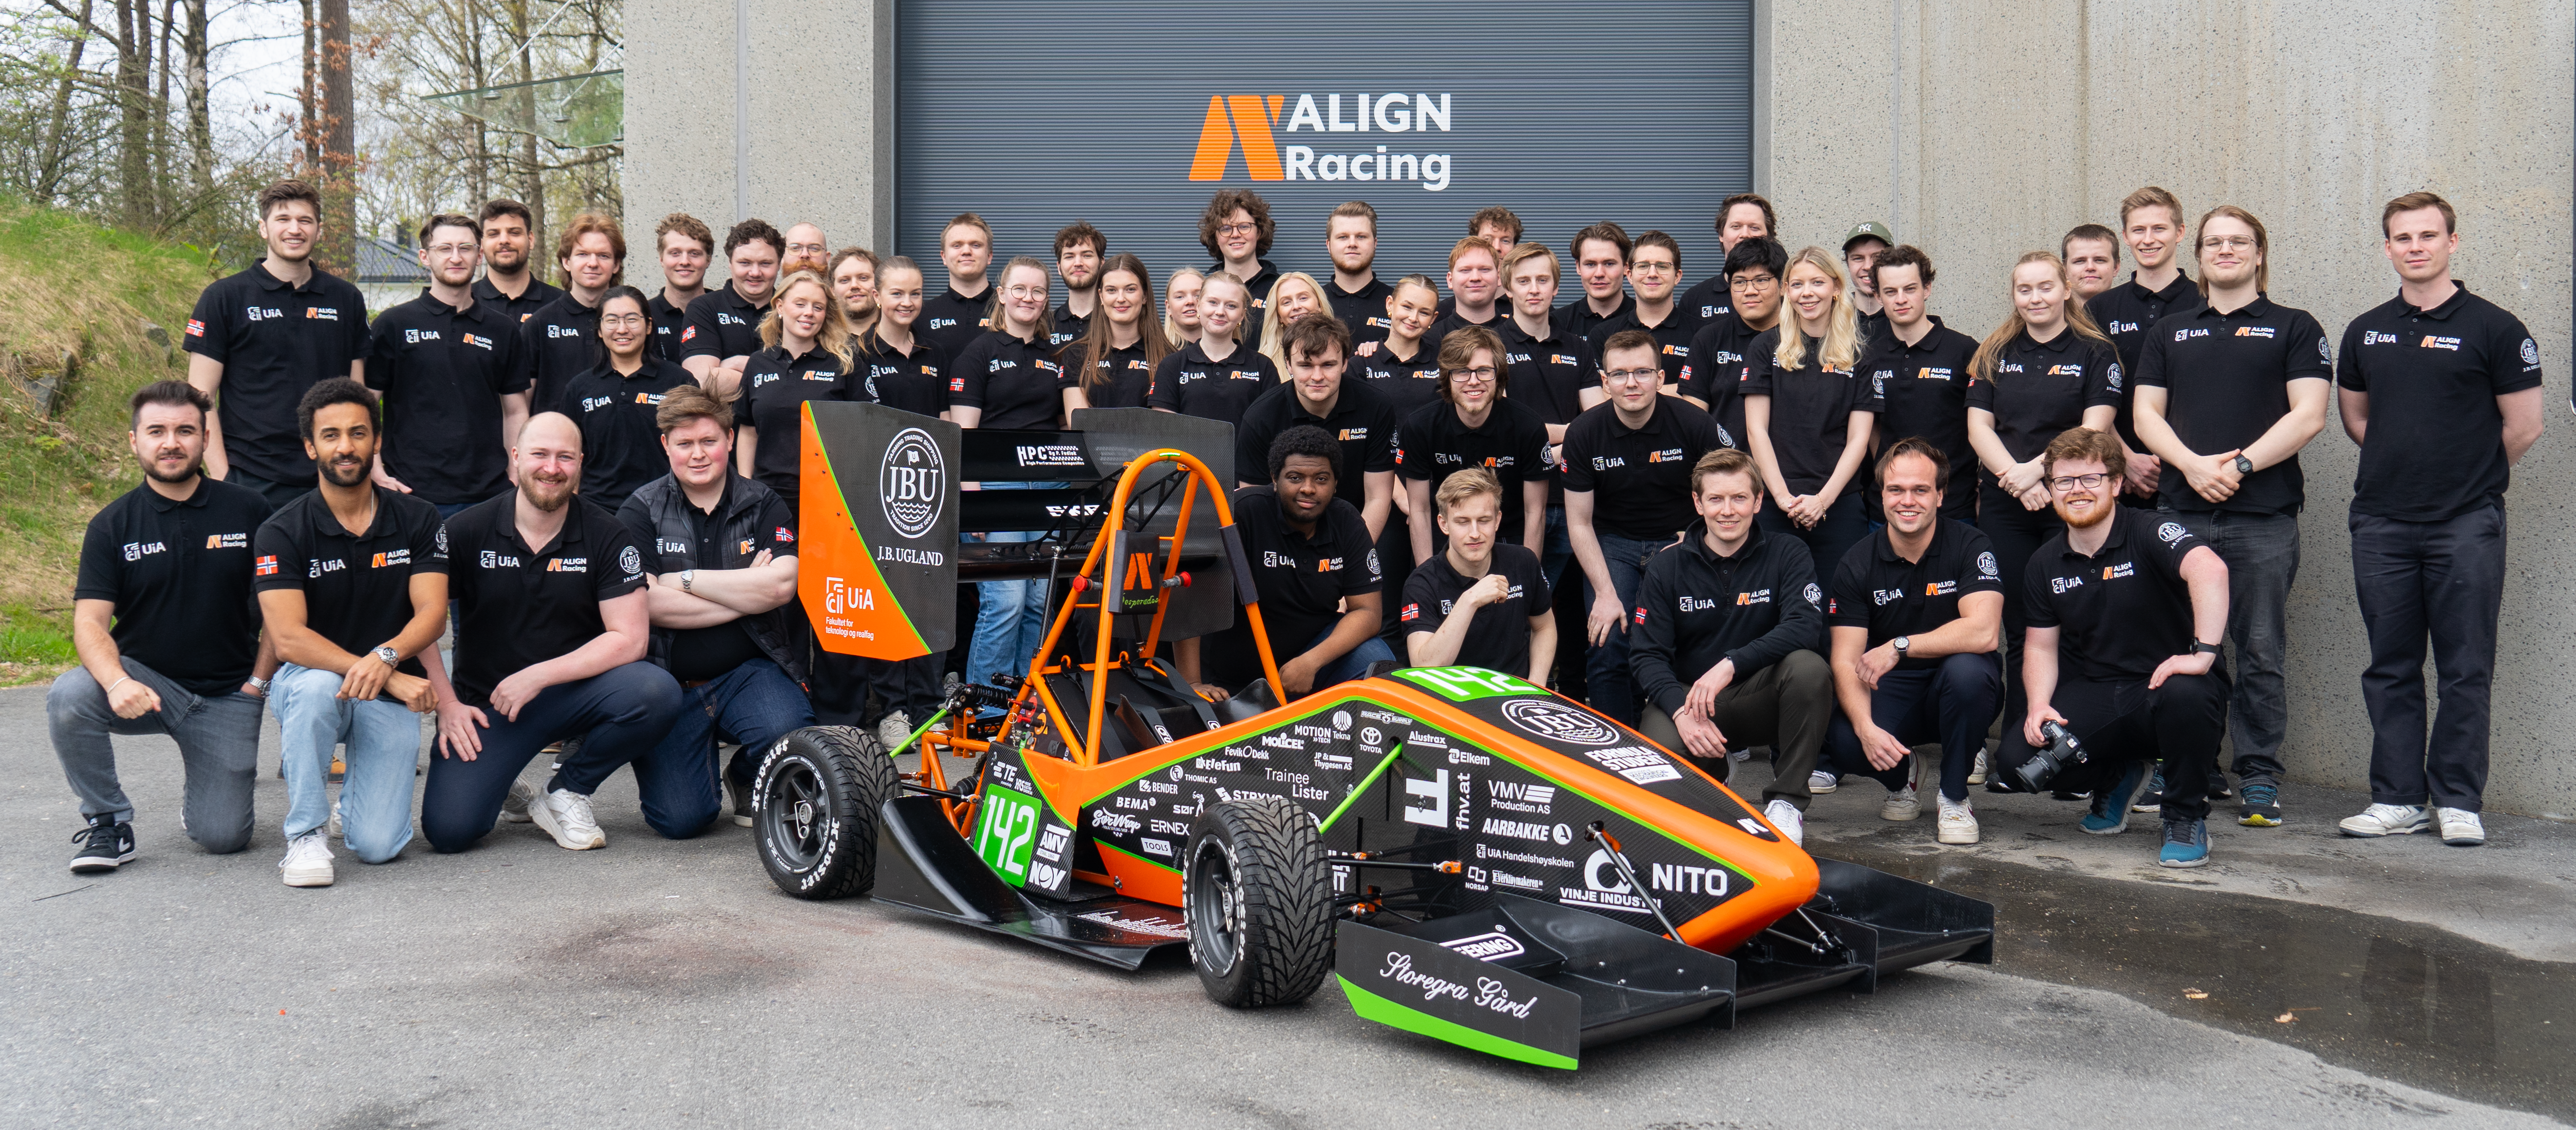 Align Racing Team - FS Italy 22